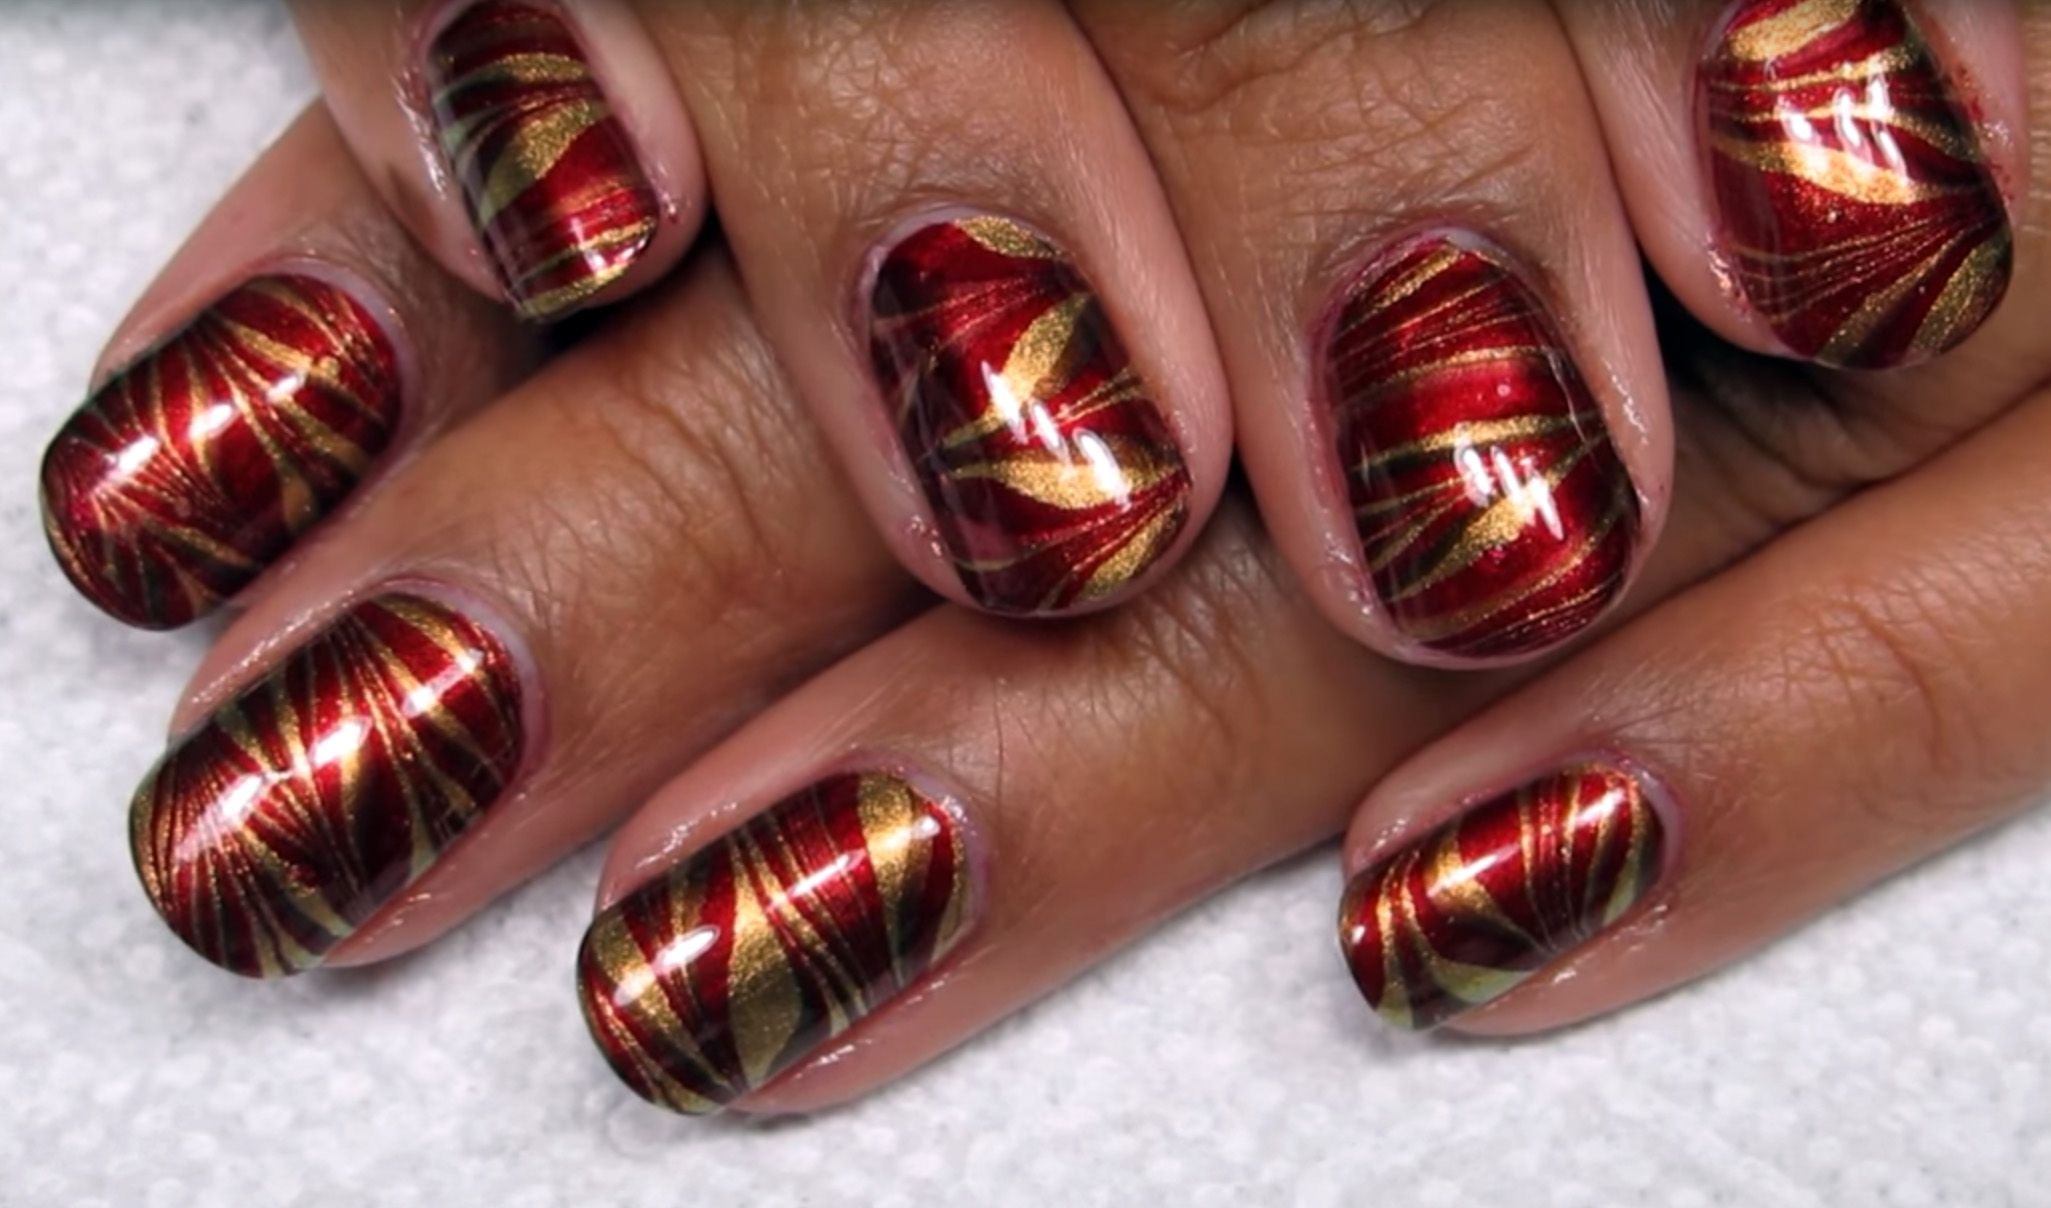 Amateur Manicure : A Nail Art Blog: November 2014